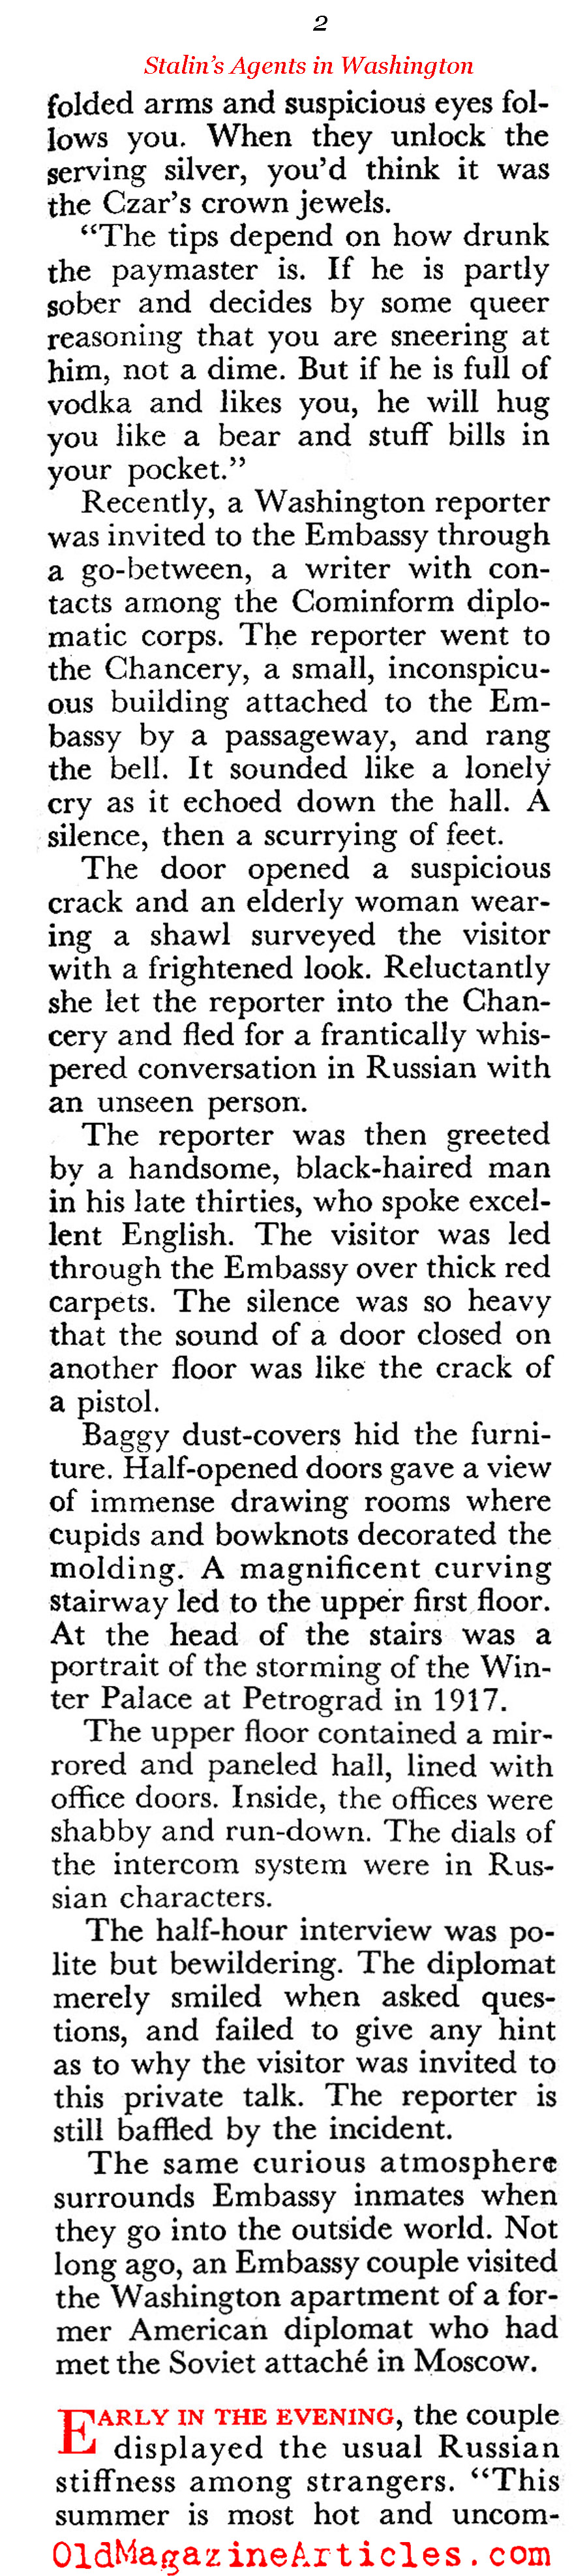 The Red Spies in Washington (Coronet Magazine, 1952)